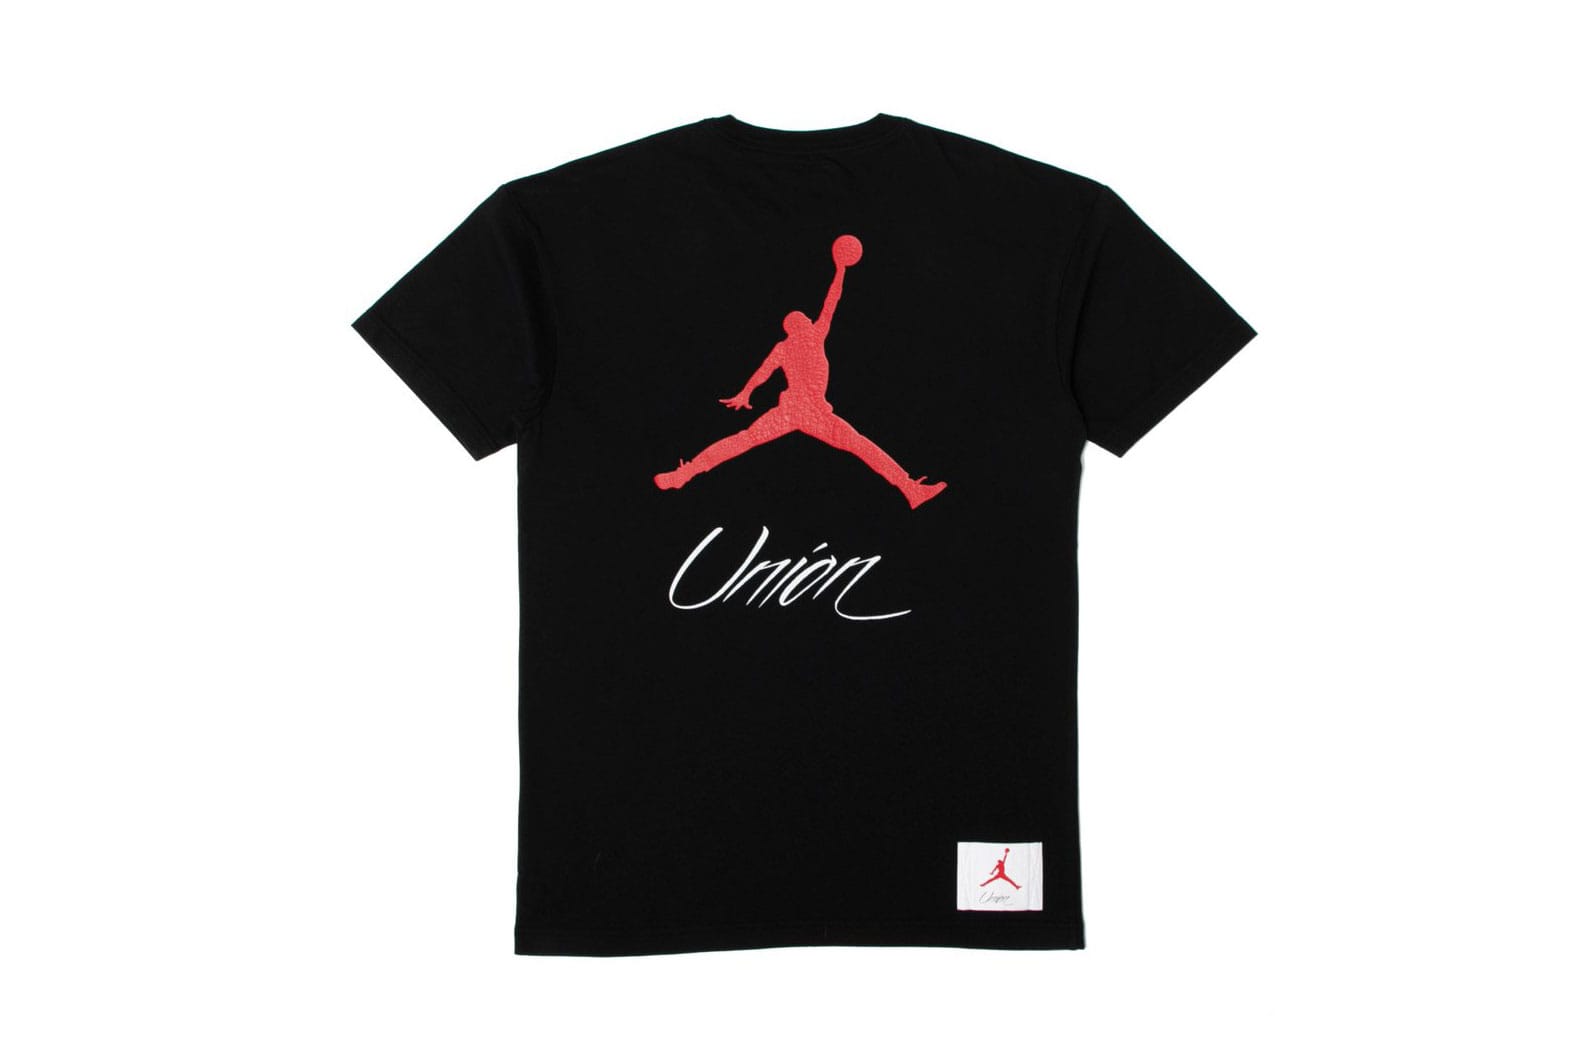 Jordan Brand X Union Shirt